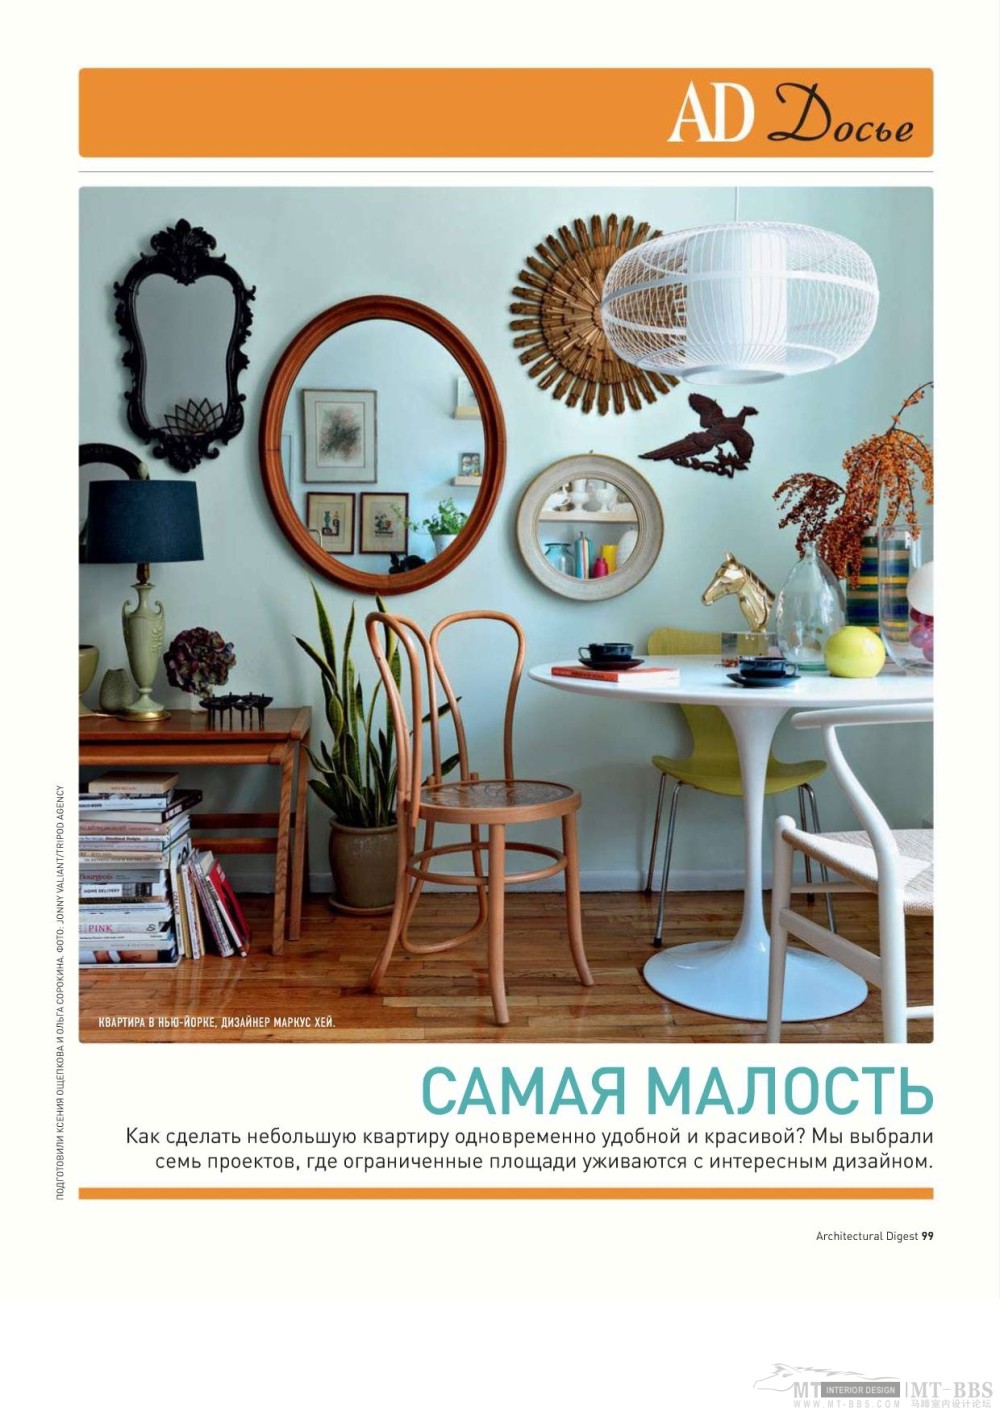 《AD Russia》2010-10(国外陈设设计杂志)_AD Russia 2010-10MT-BBS-101.jpg